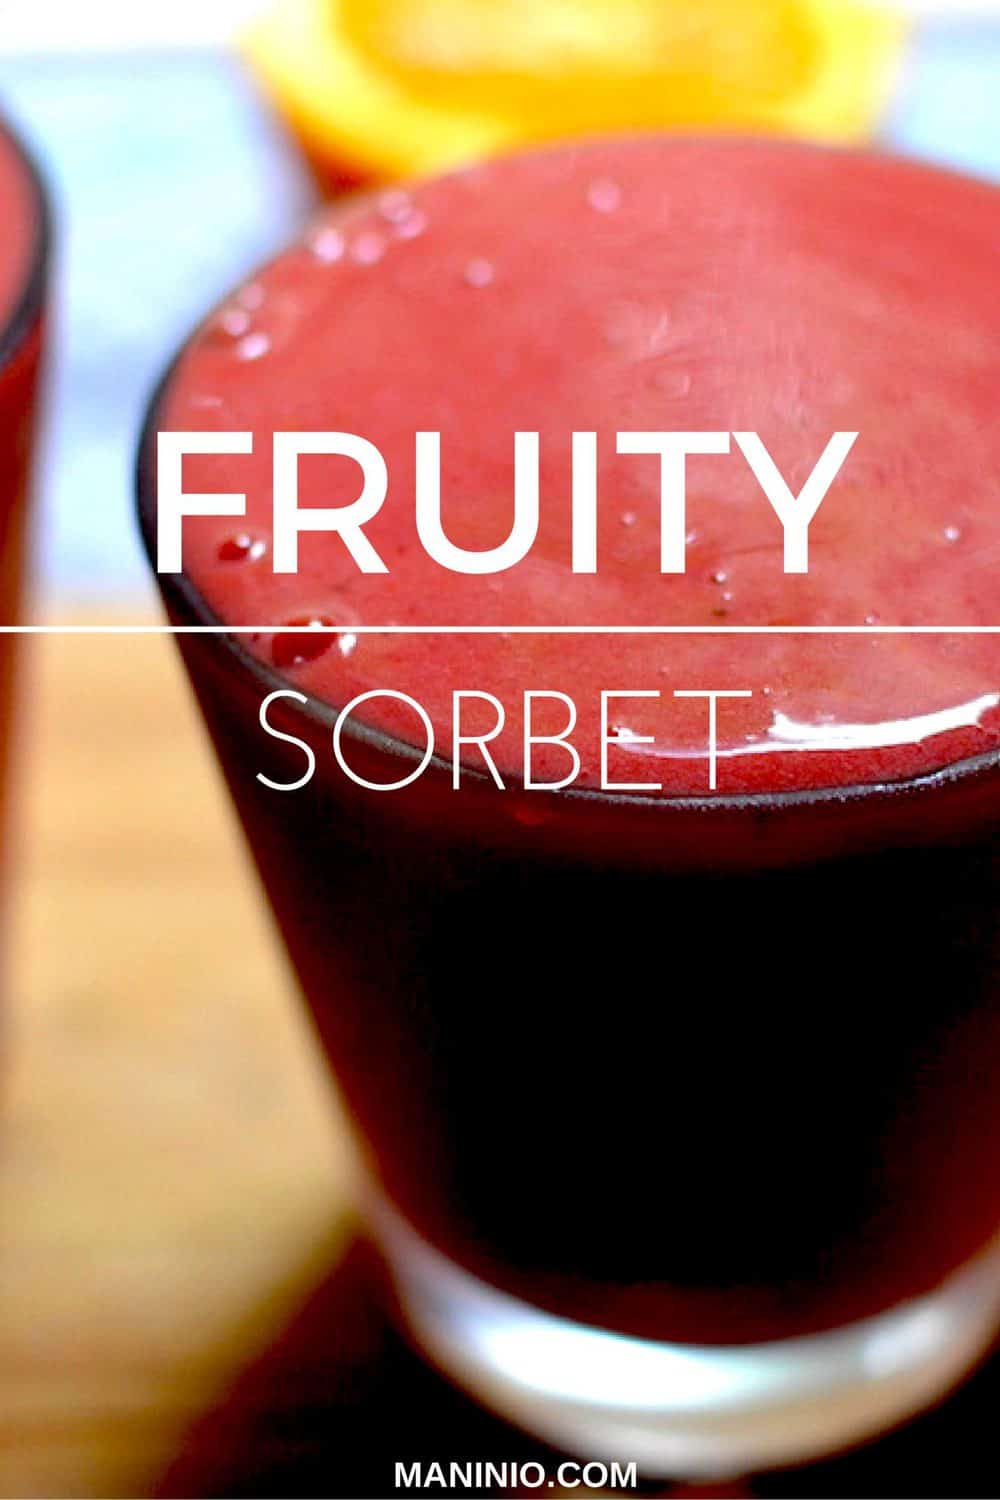 Fruity - sorbet - maninio - strawberry - smoothie - fruits